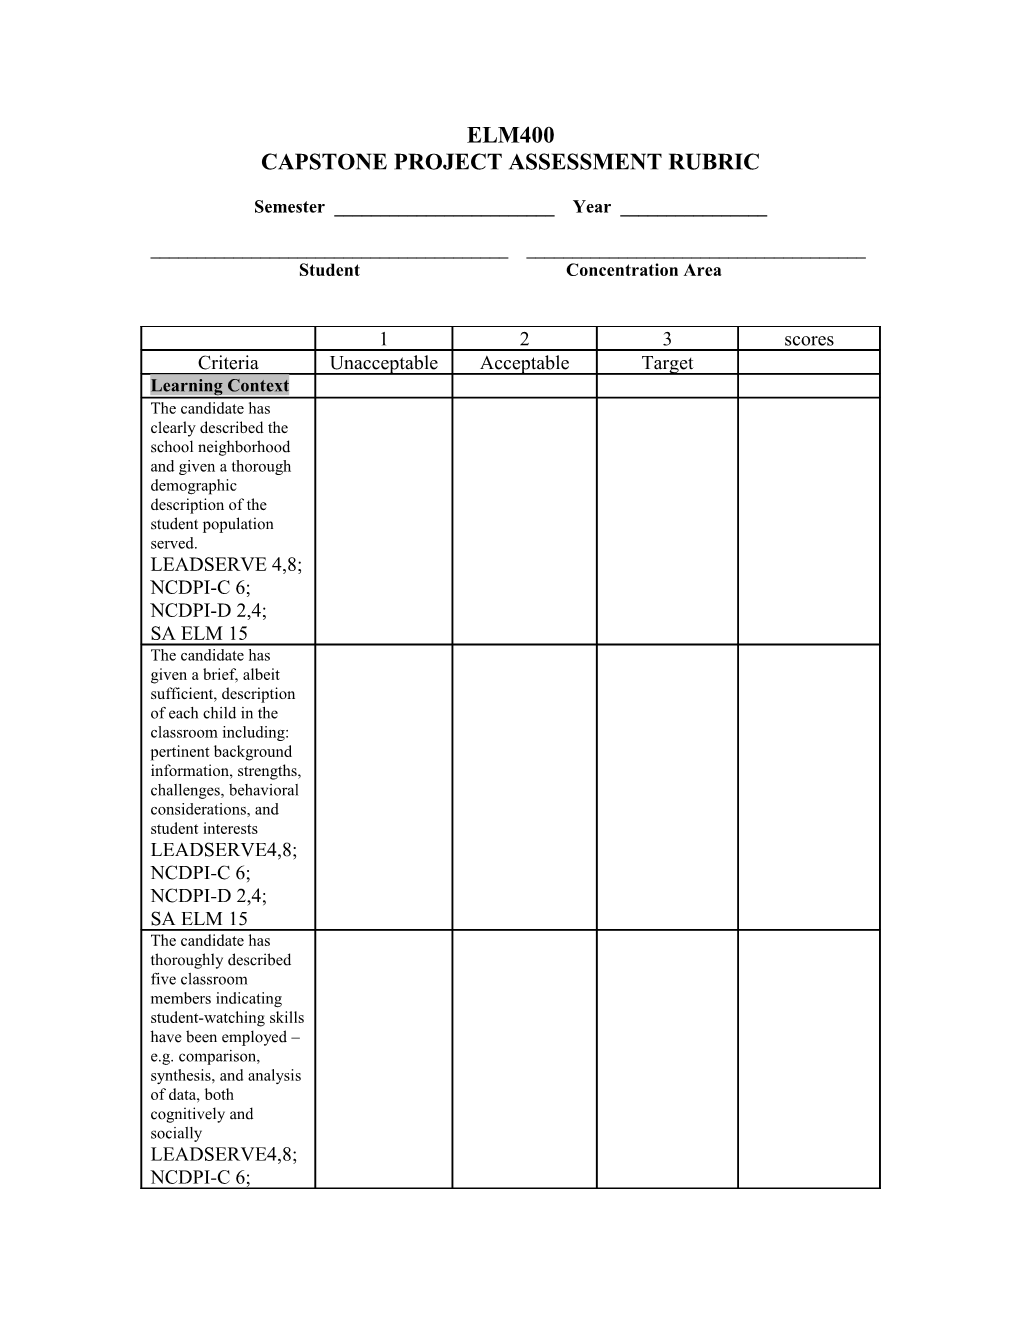 Capstone Project Assessment Rubric